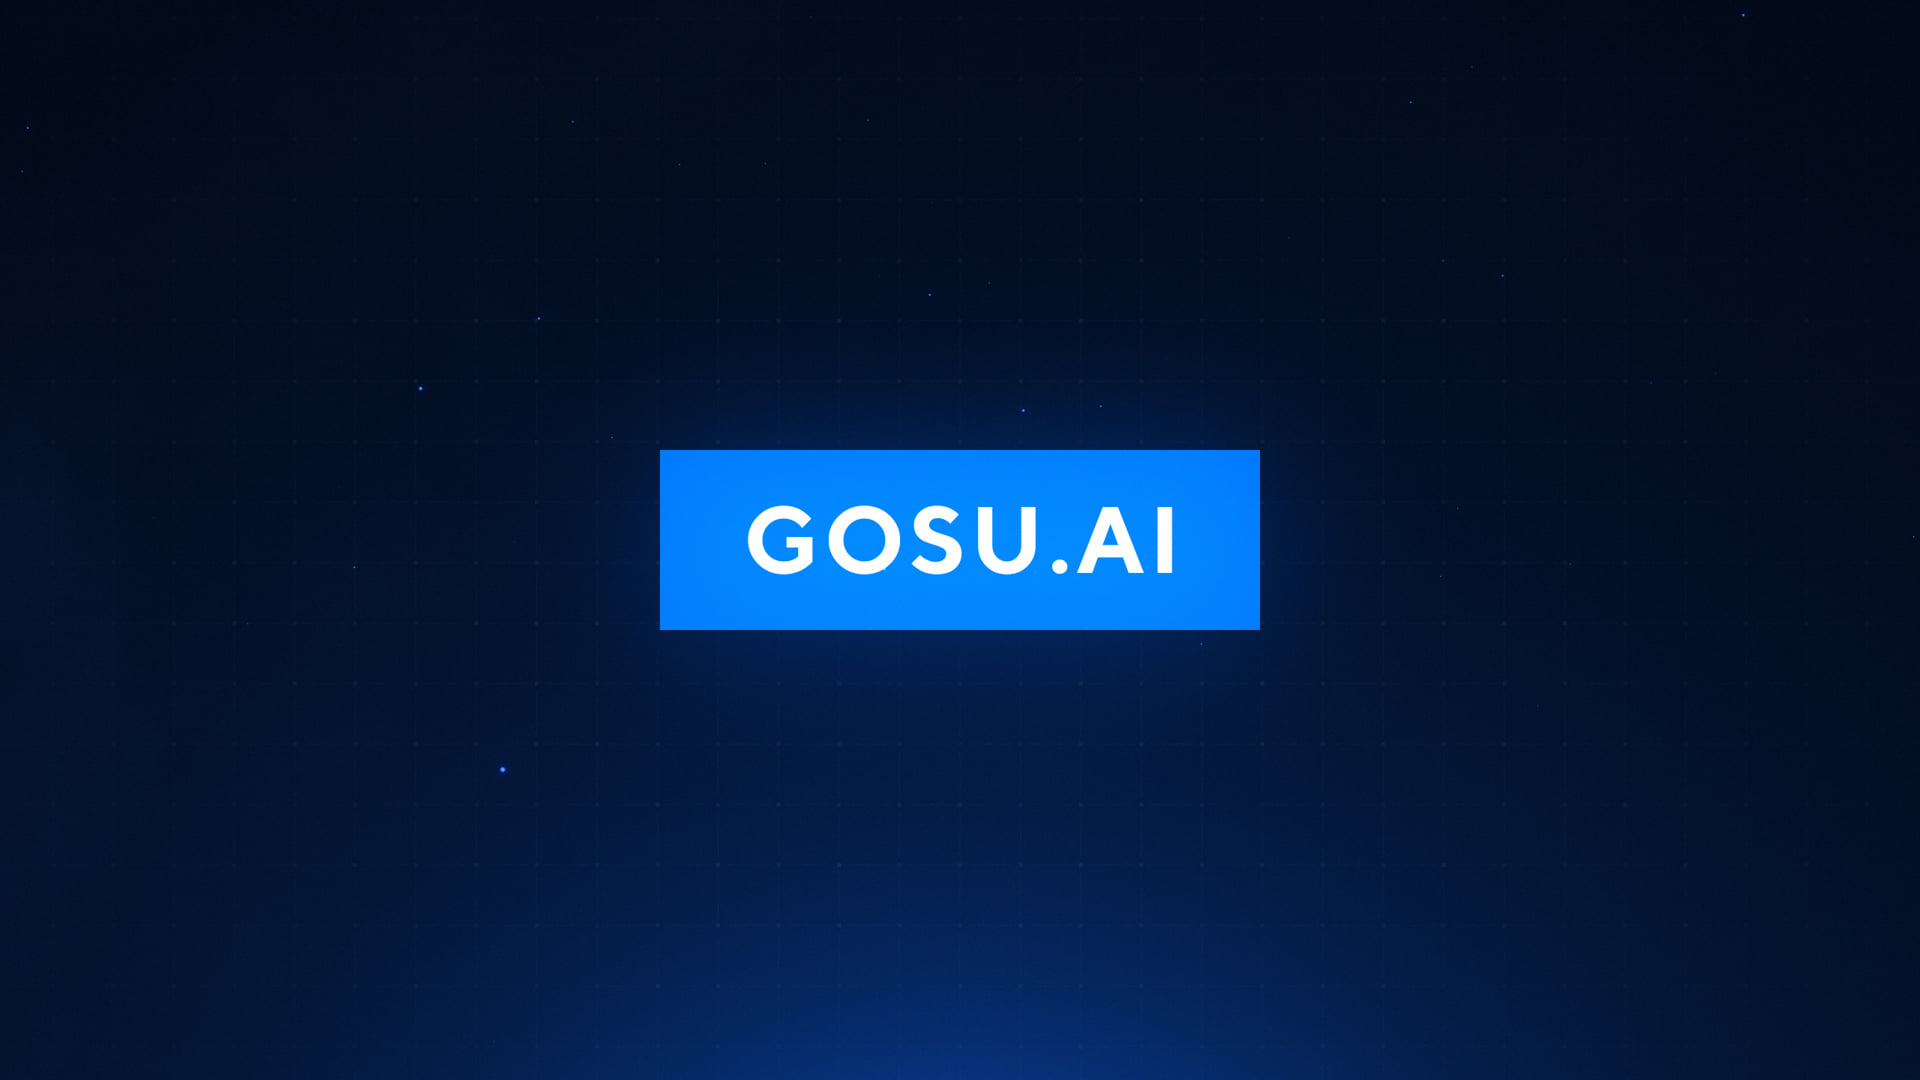 GOSU.AI